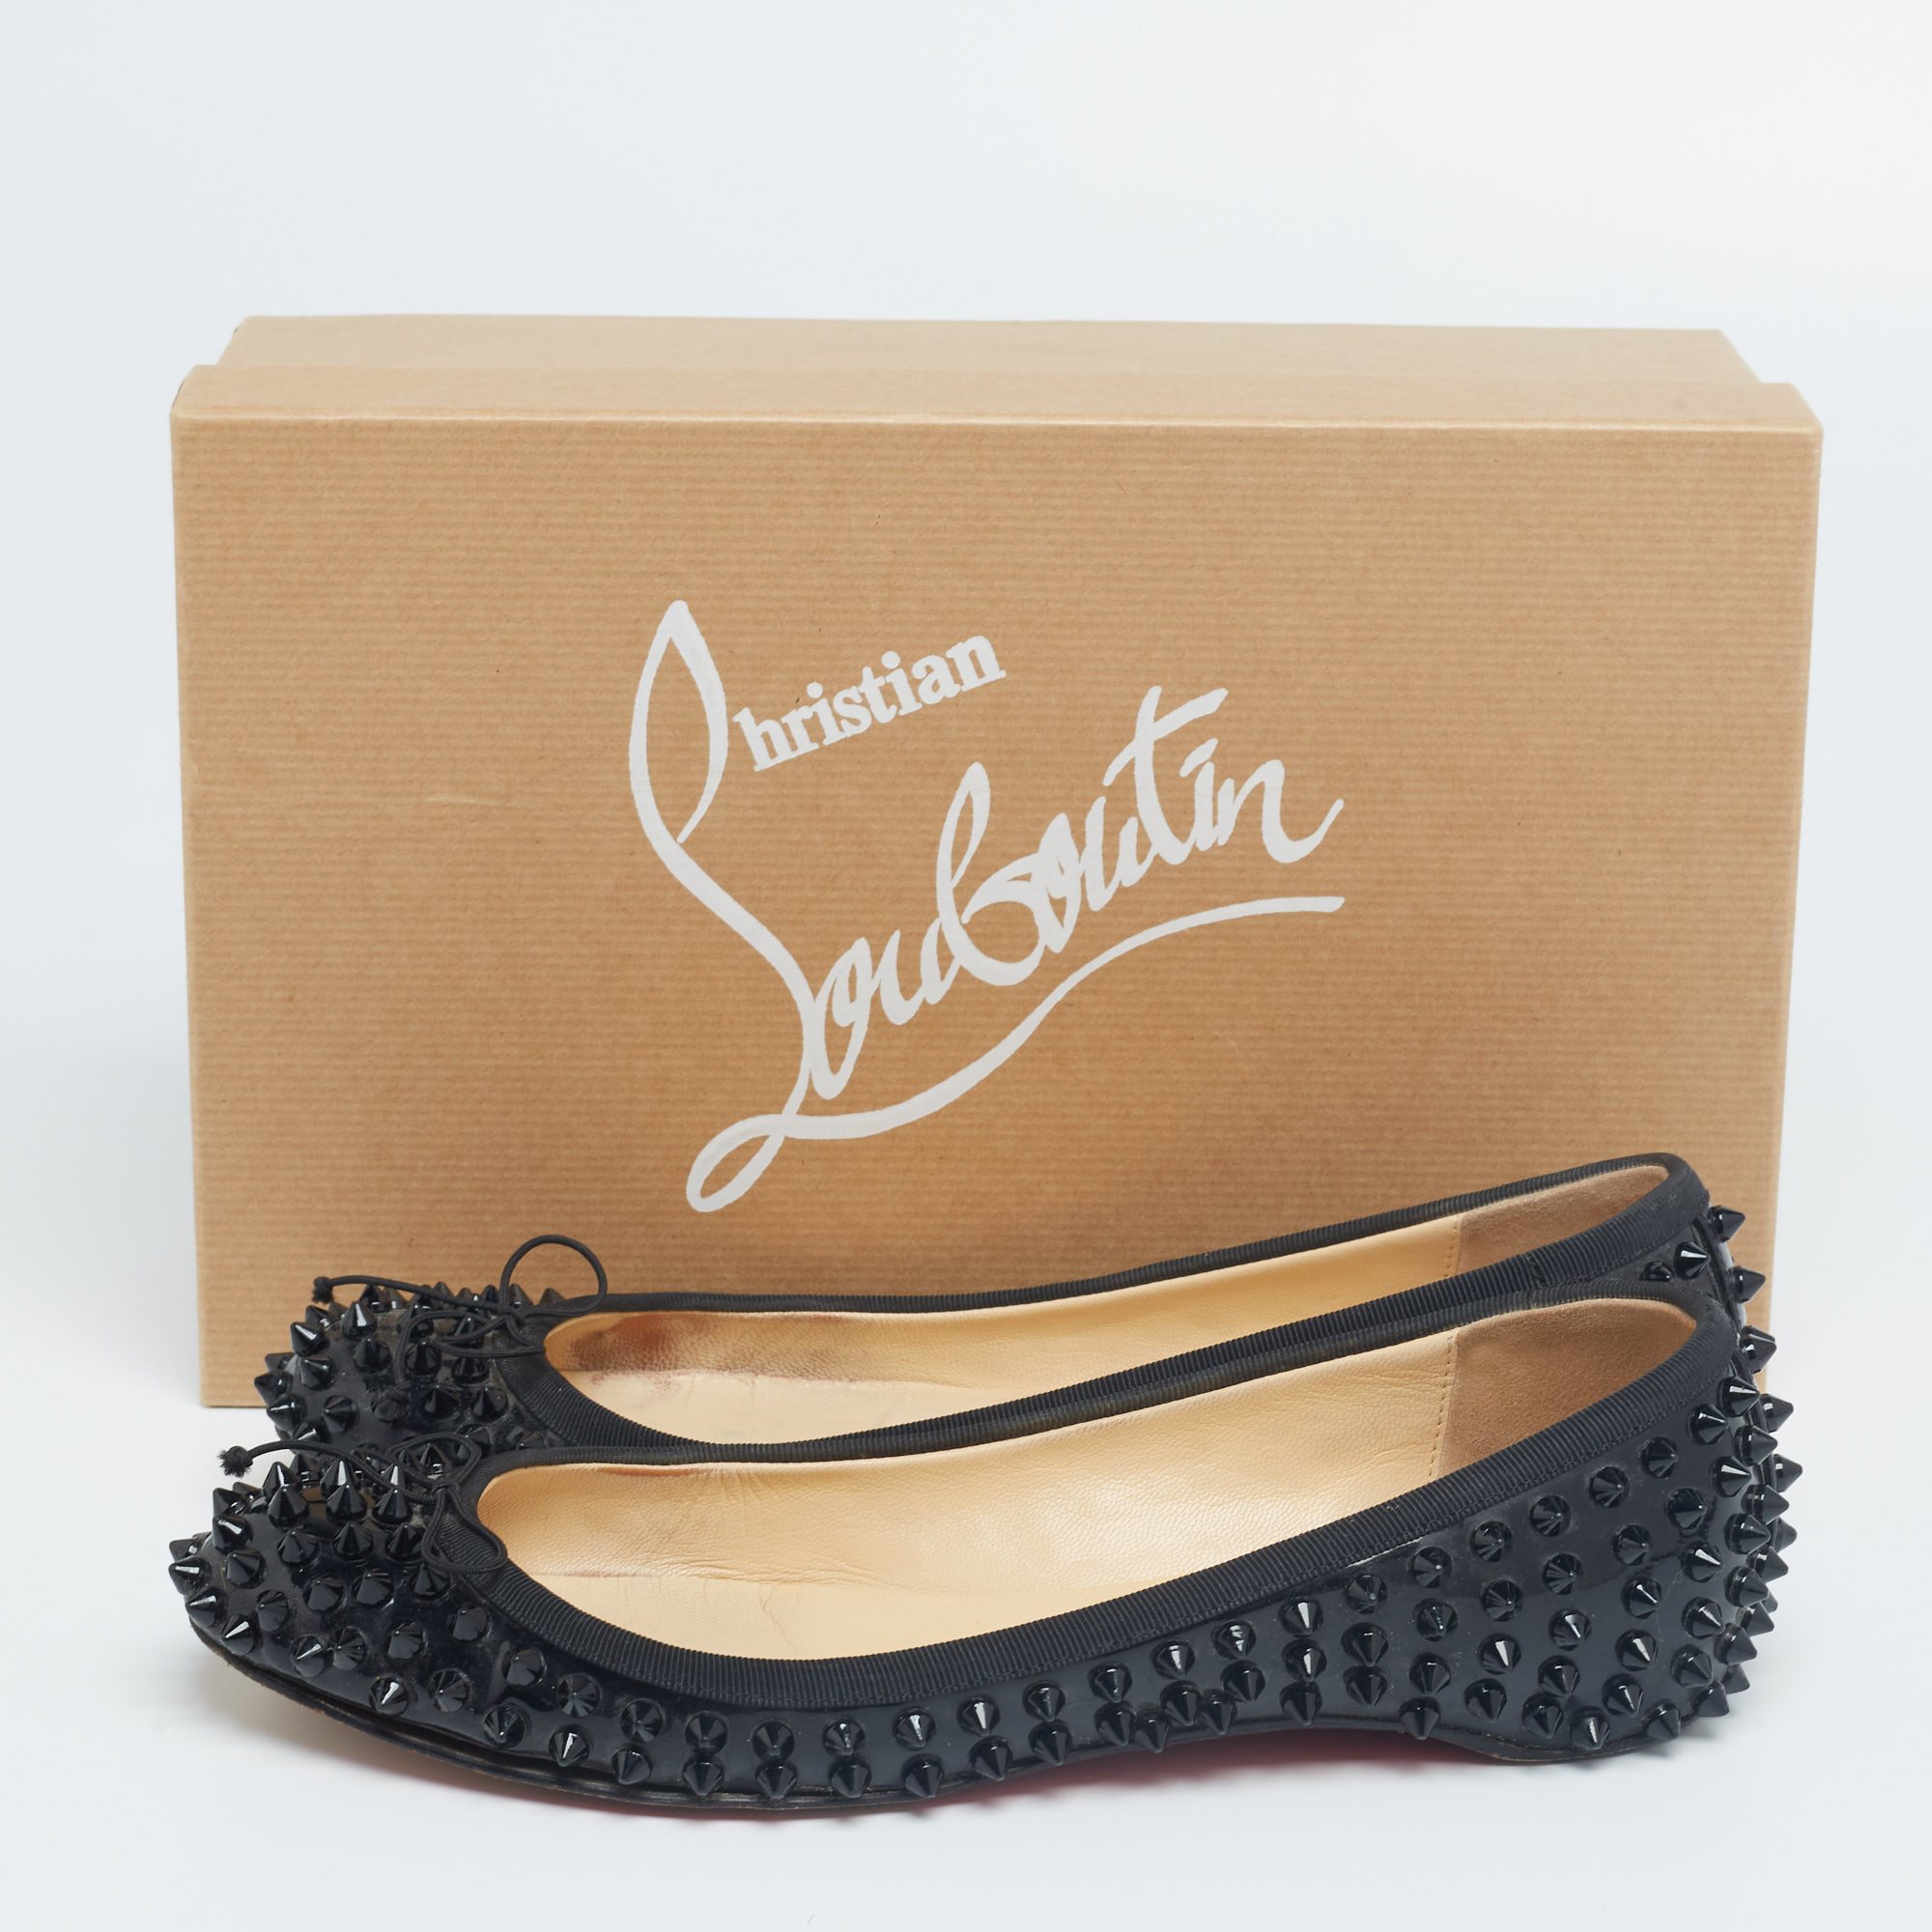 Christian Louboutin Black Patent Leather Sonietta Spikes Bow Ballet Flats Size 36.5